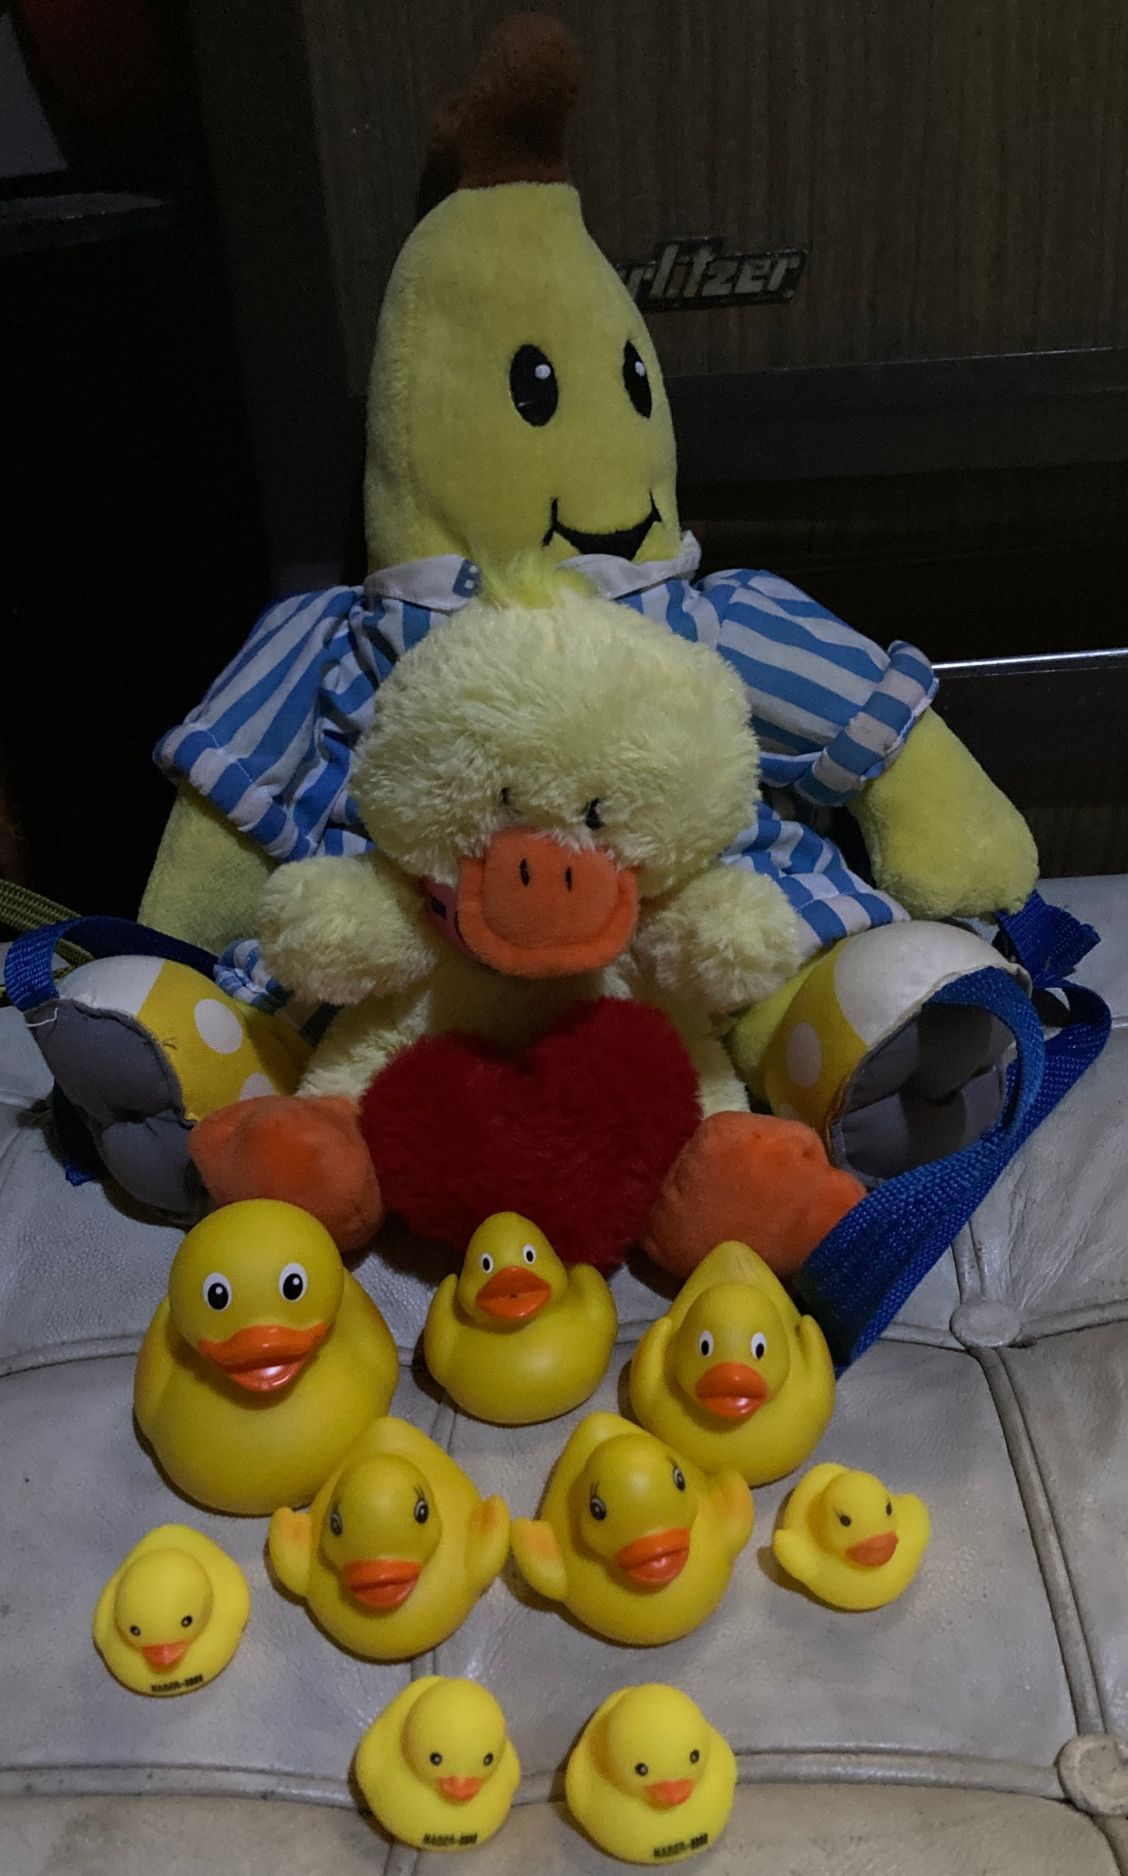 Banana backpack wearing striped pyjamas. 8 rubber duckies. Duck plushy holding loveheart.